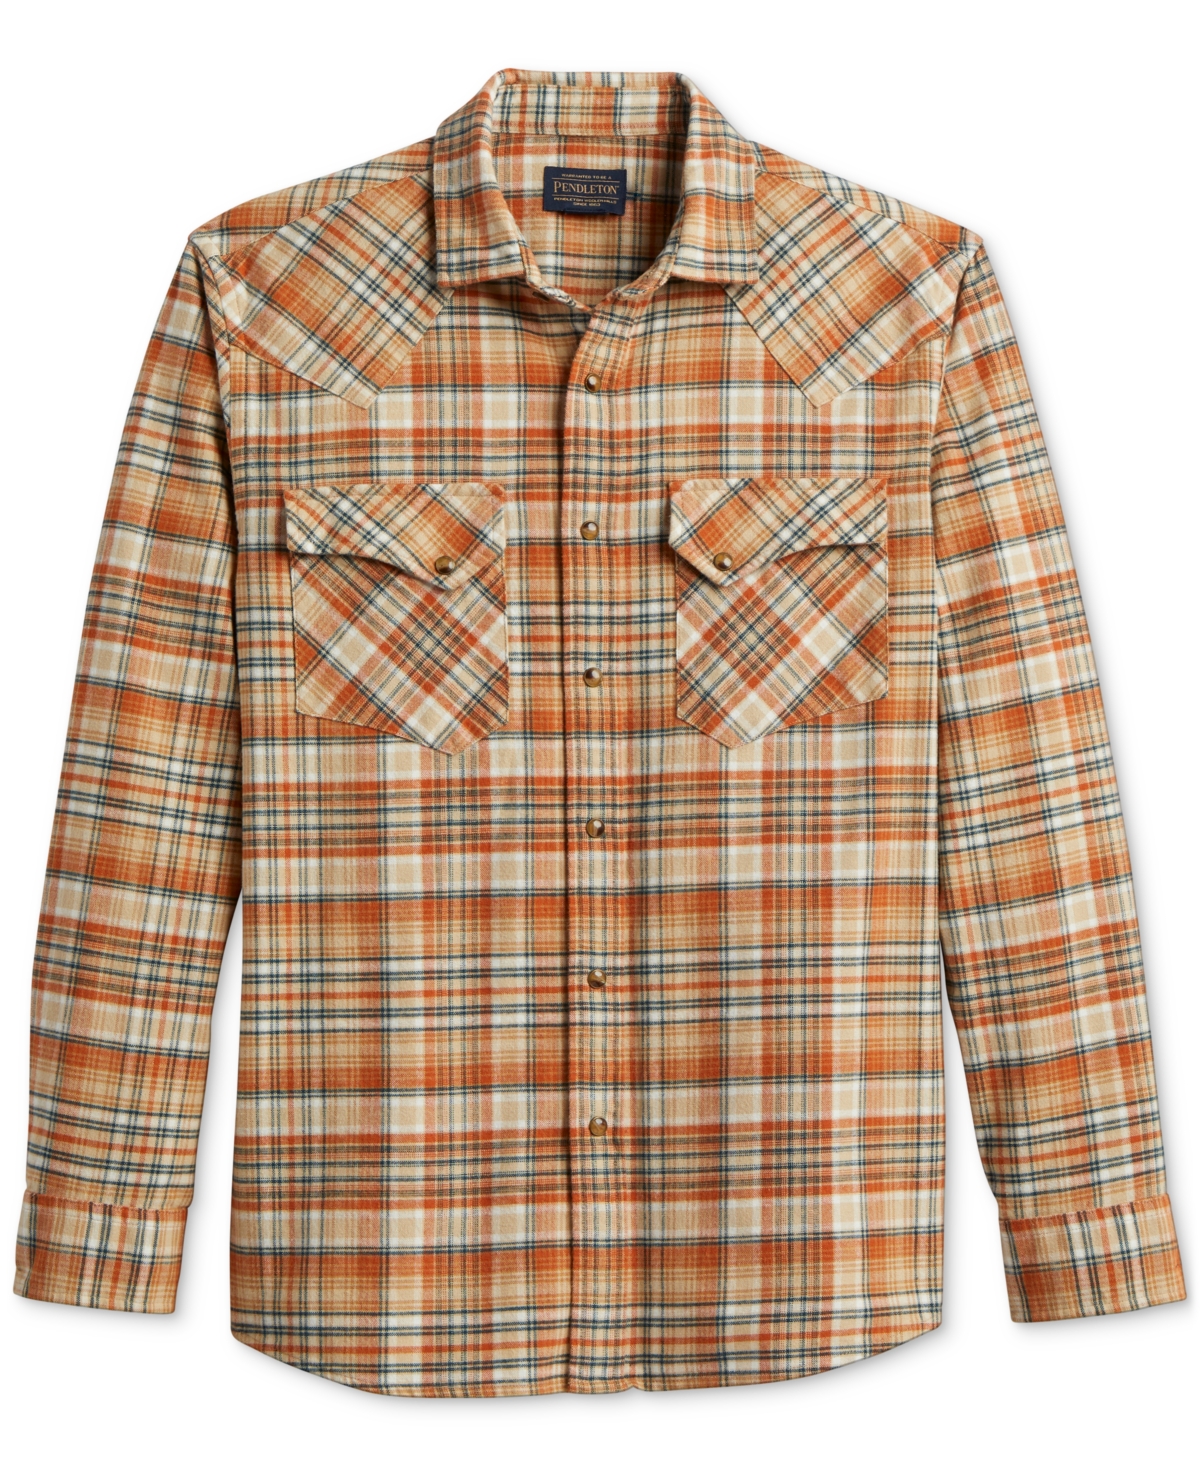 Men's Wyatt Plaid Button-Down Western Shirt - Tan/brown/rust Plaid